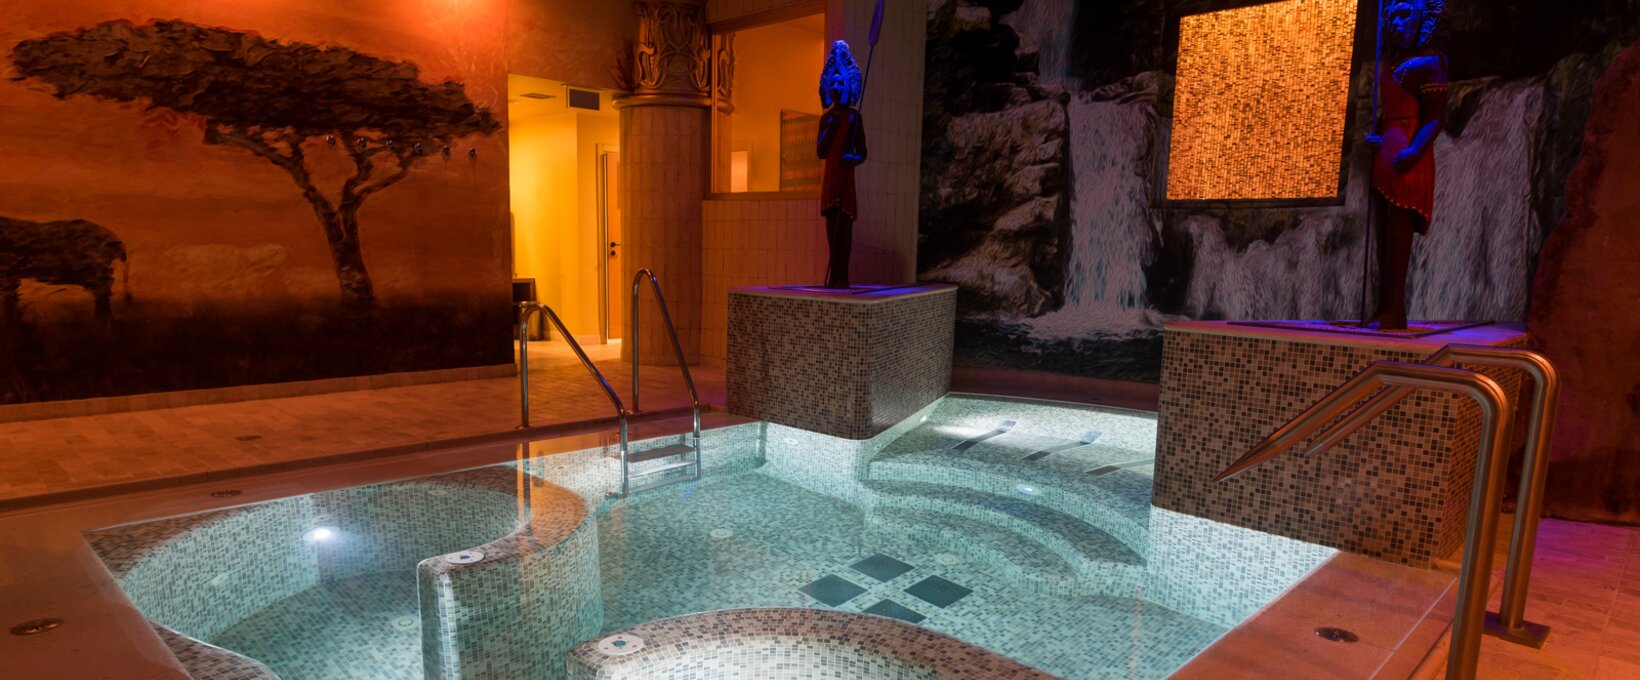 Indoor Pool mit Leiter | Hotel Ljubljana in Slowenien